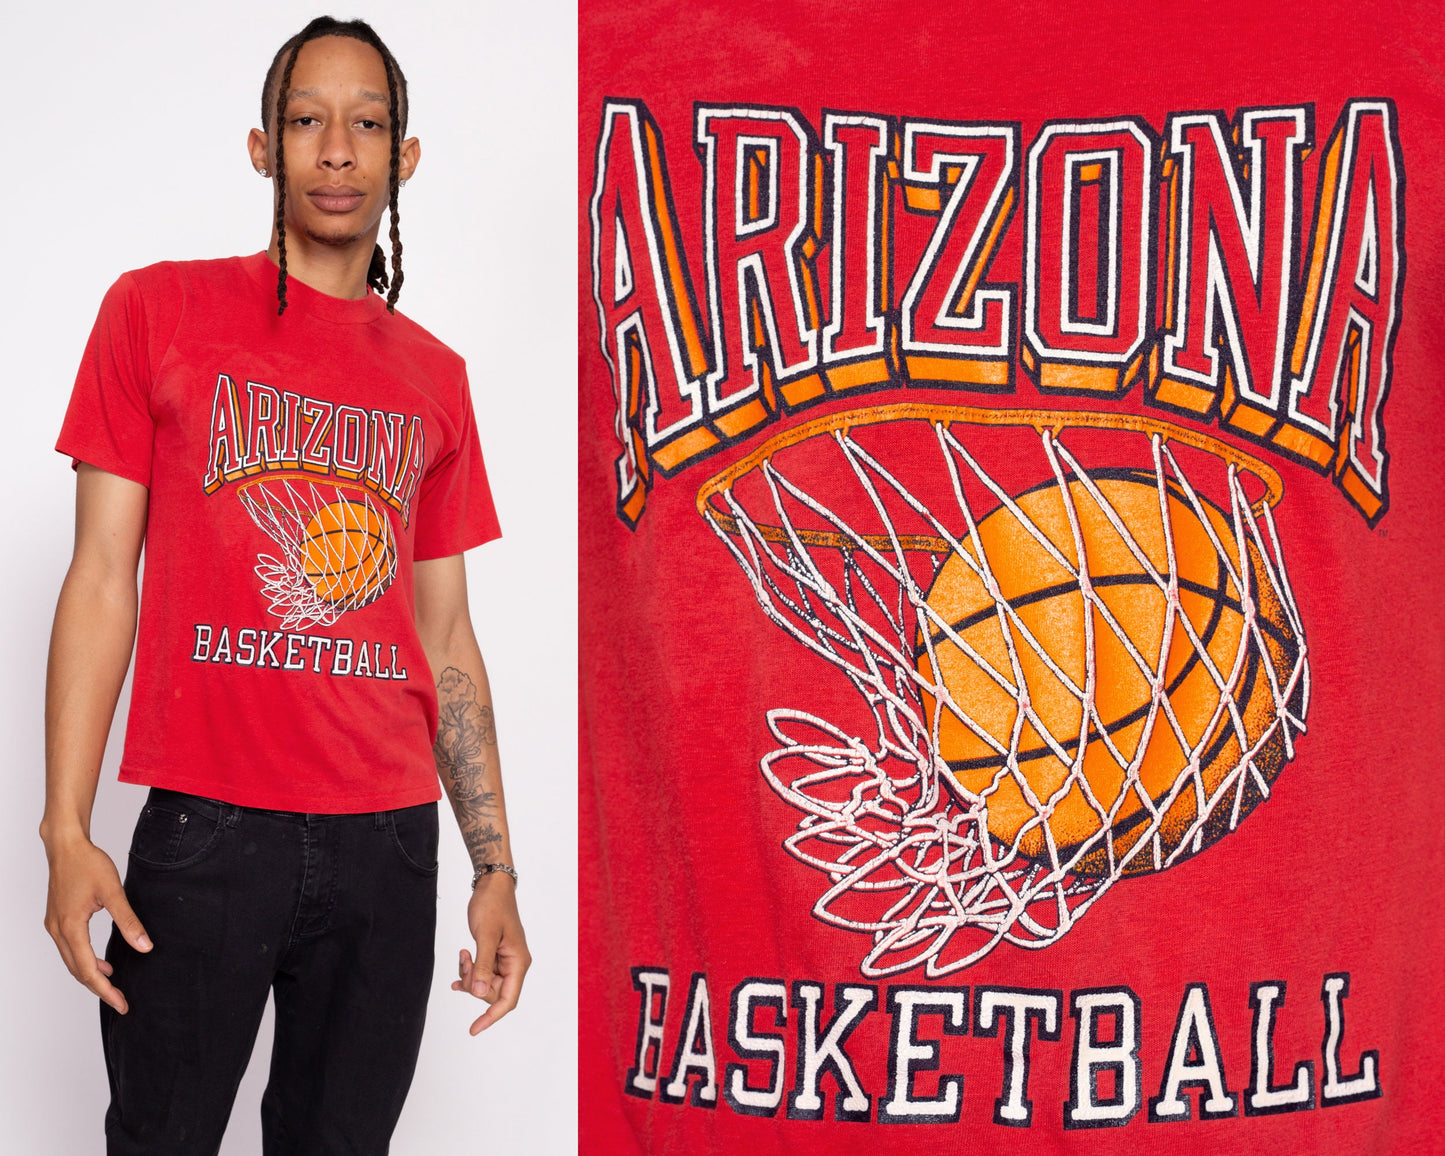 Vintage Arizona Cardinals T Shirt Size Large